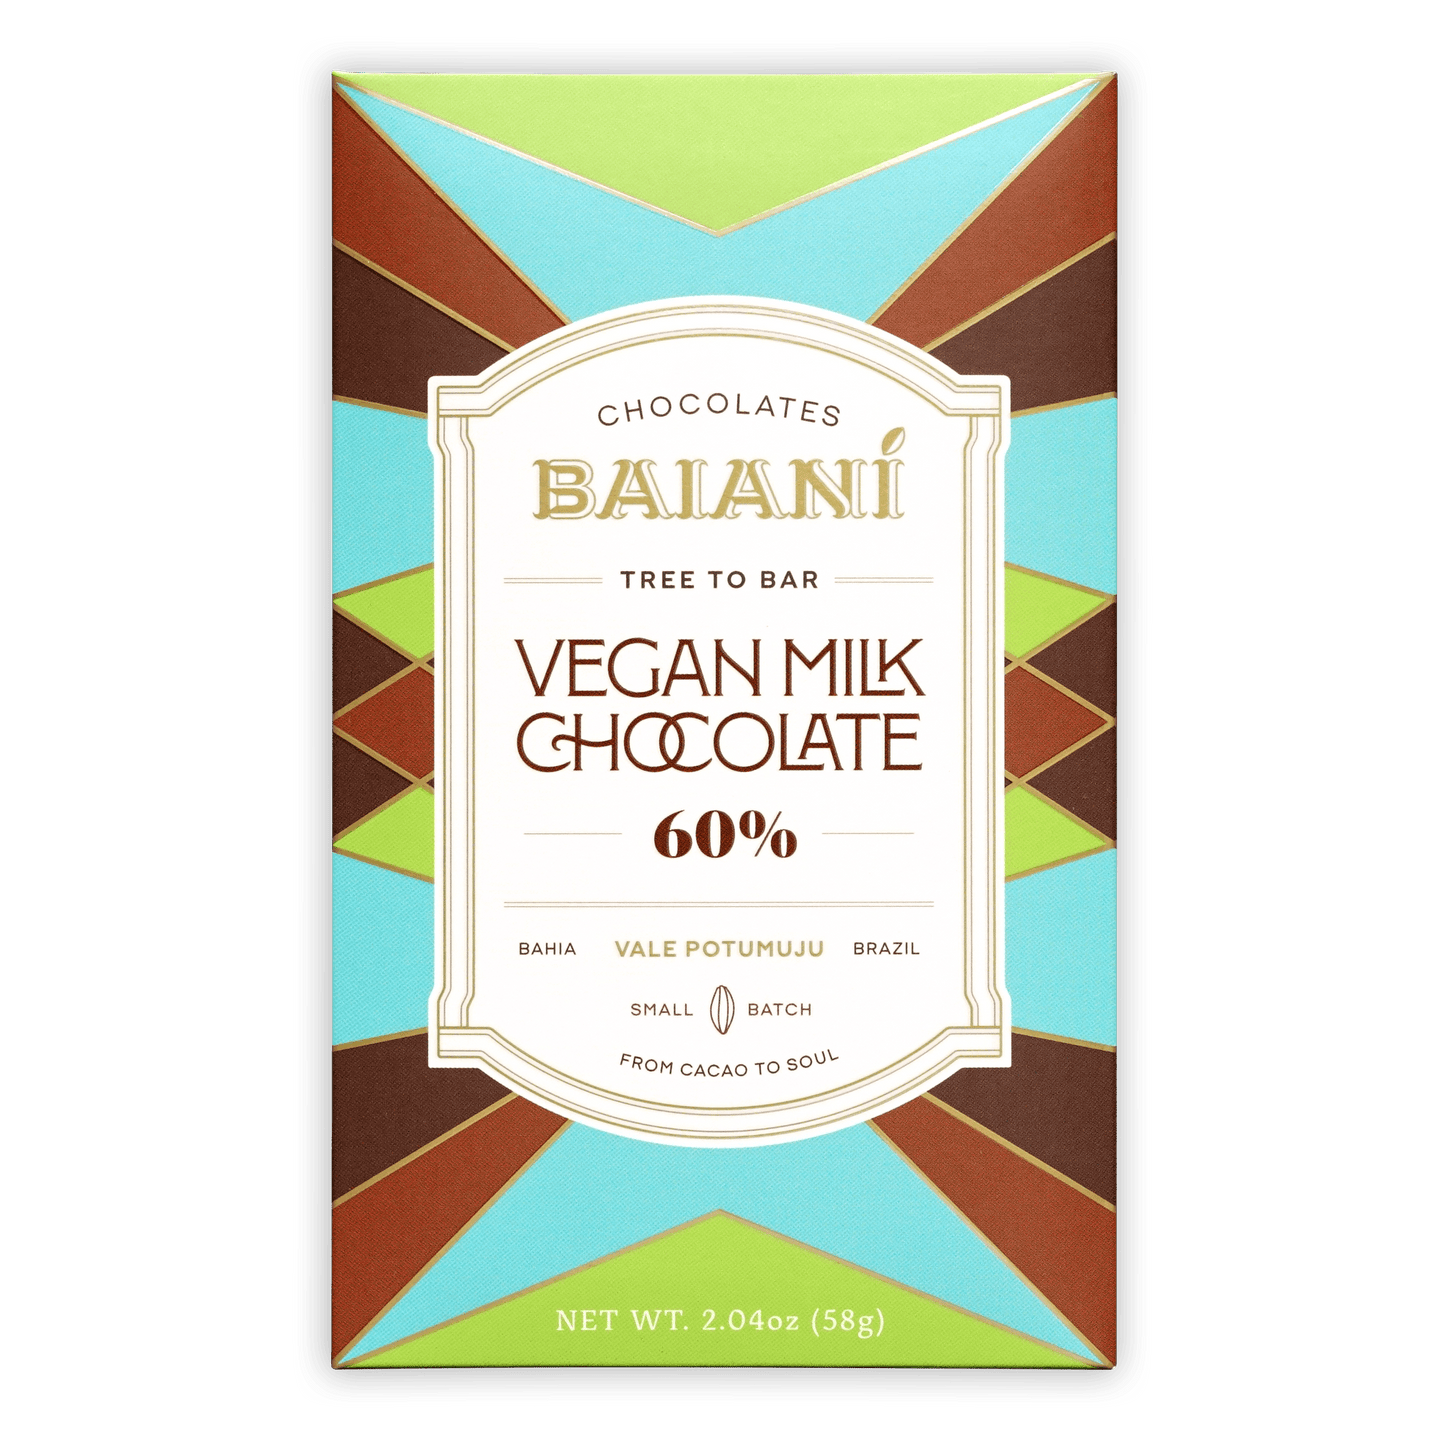 Baiani Vegan Milk Chocolate 60%